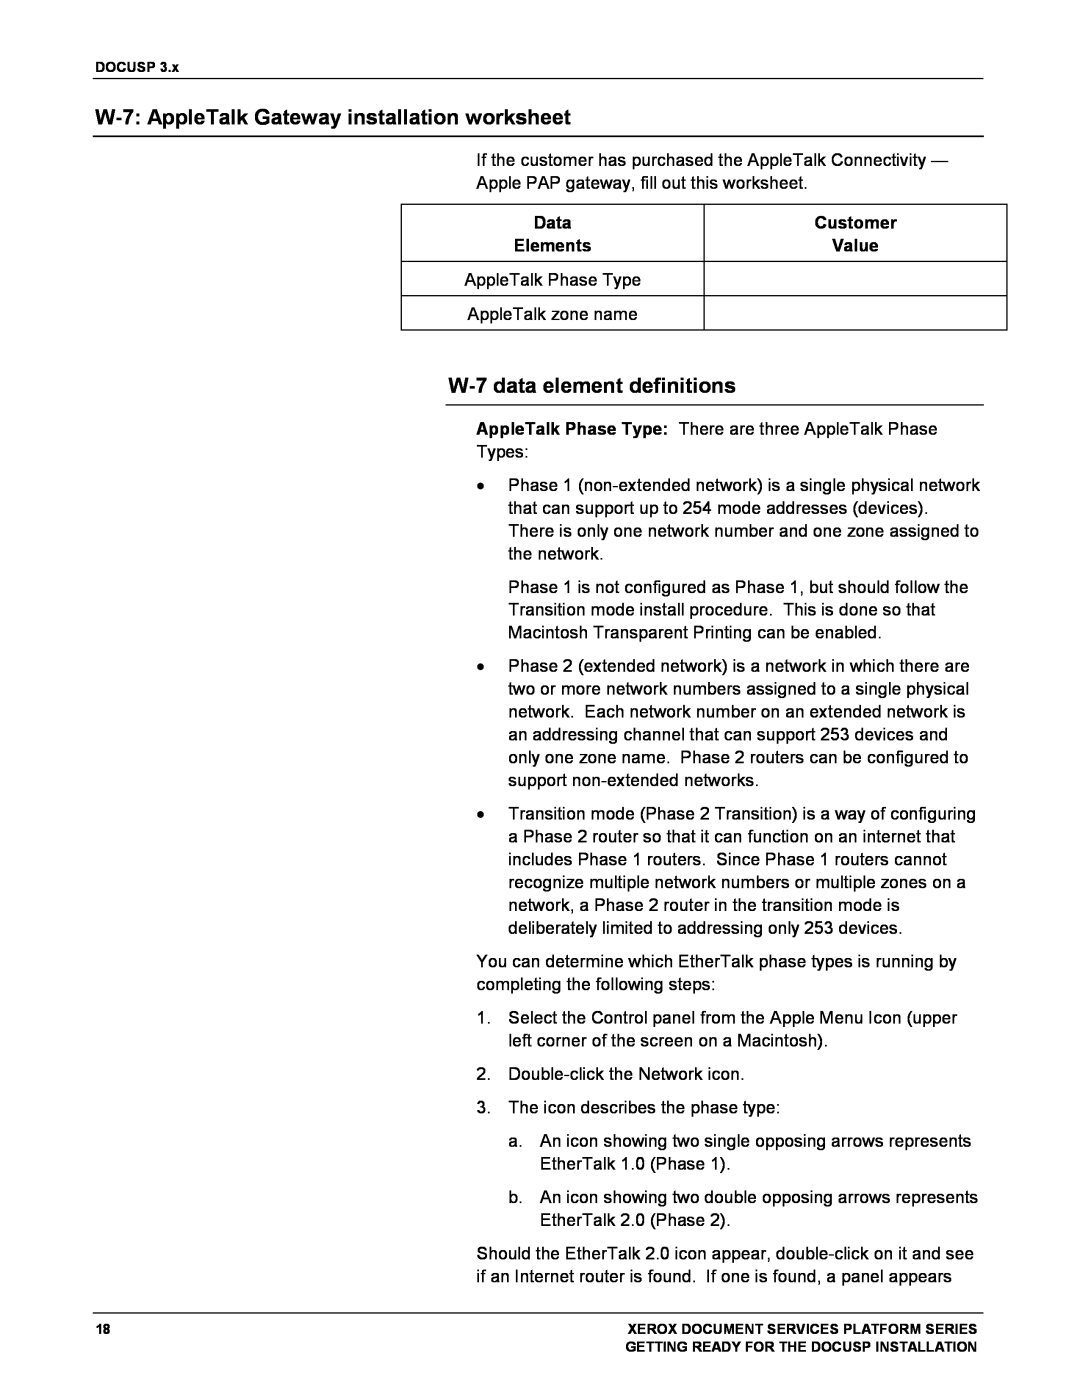 Xerox 701P38969 manual W-7:AppleTalk Gateway installation worksheet, W-7data element definitions, Data, Customer, Elements 